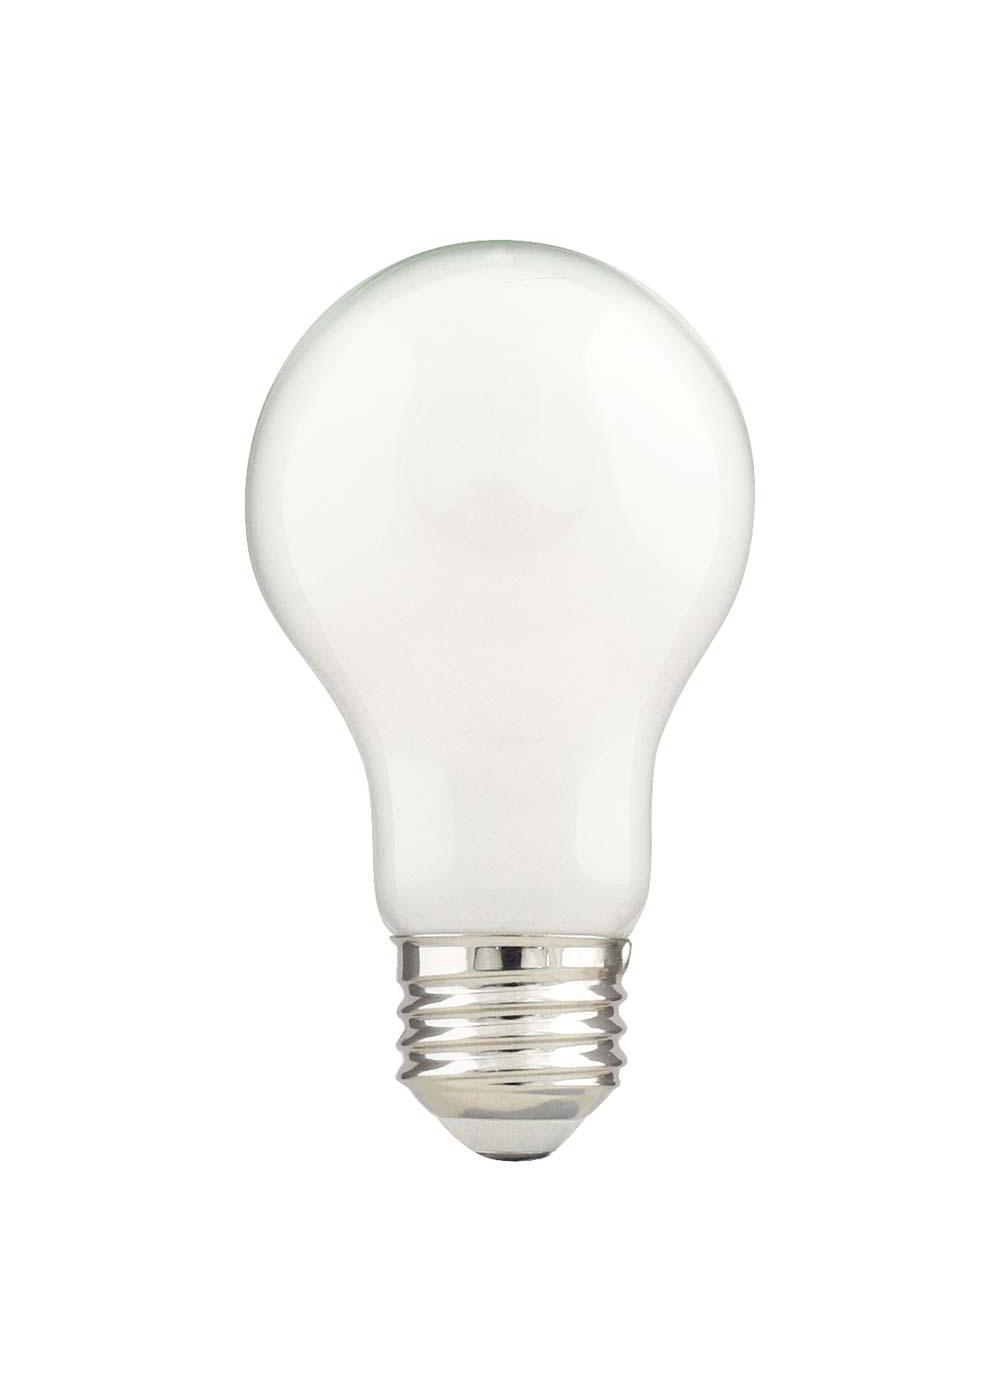 Green Watt A19 75-Watt Frosted LED Light Bulbs - Daylight; image 3 of 3